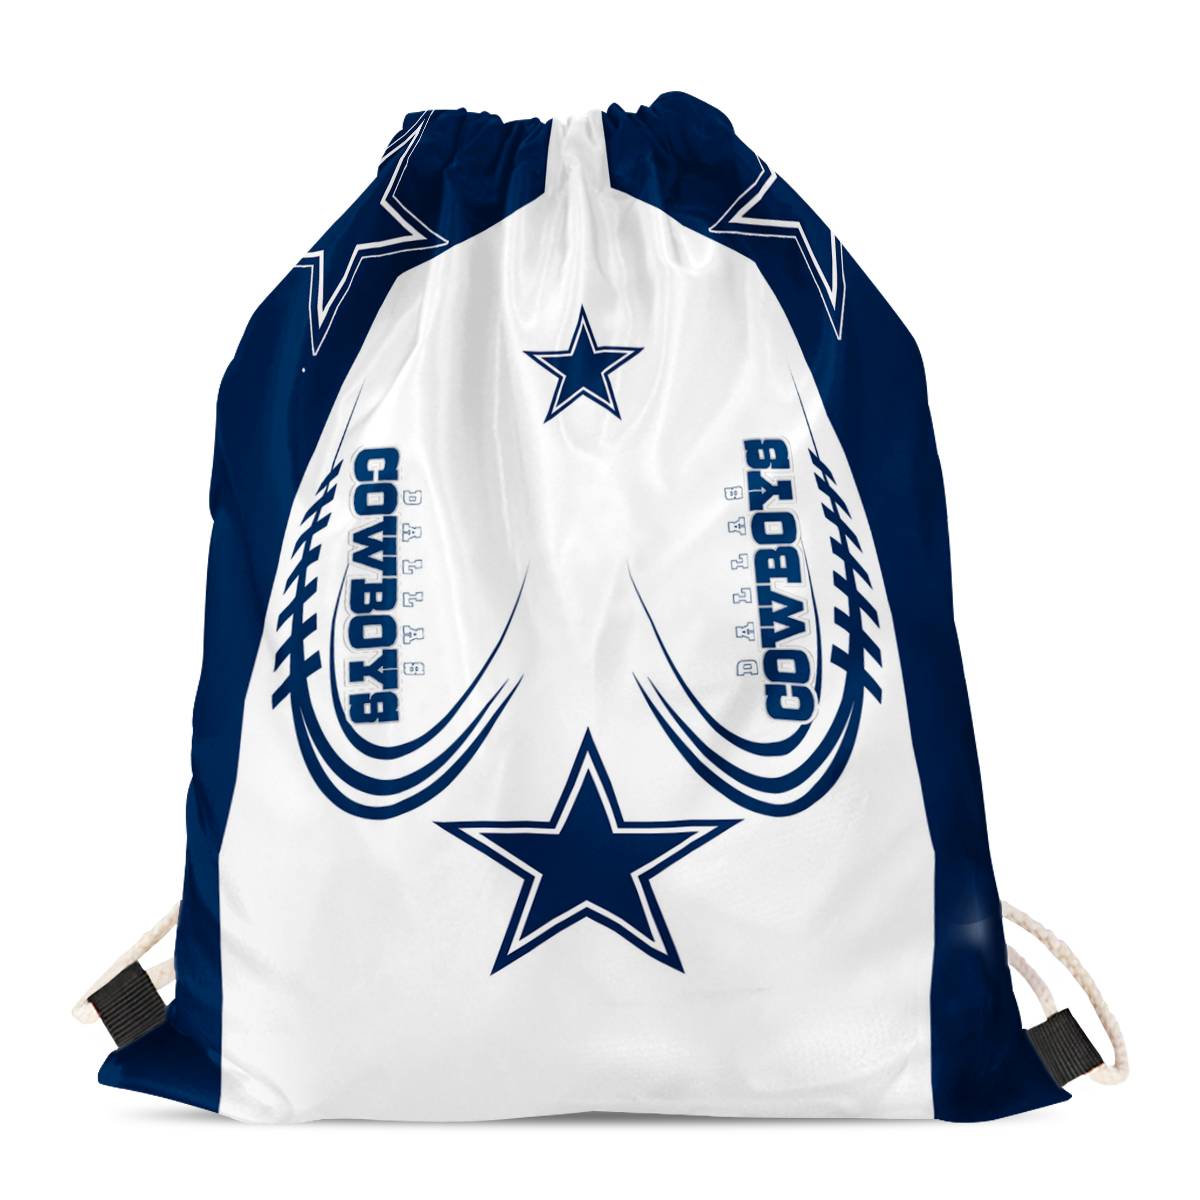 Dallas Cowboys Drawstring Backpack sack / Gym bag 18" x 14" 001